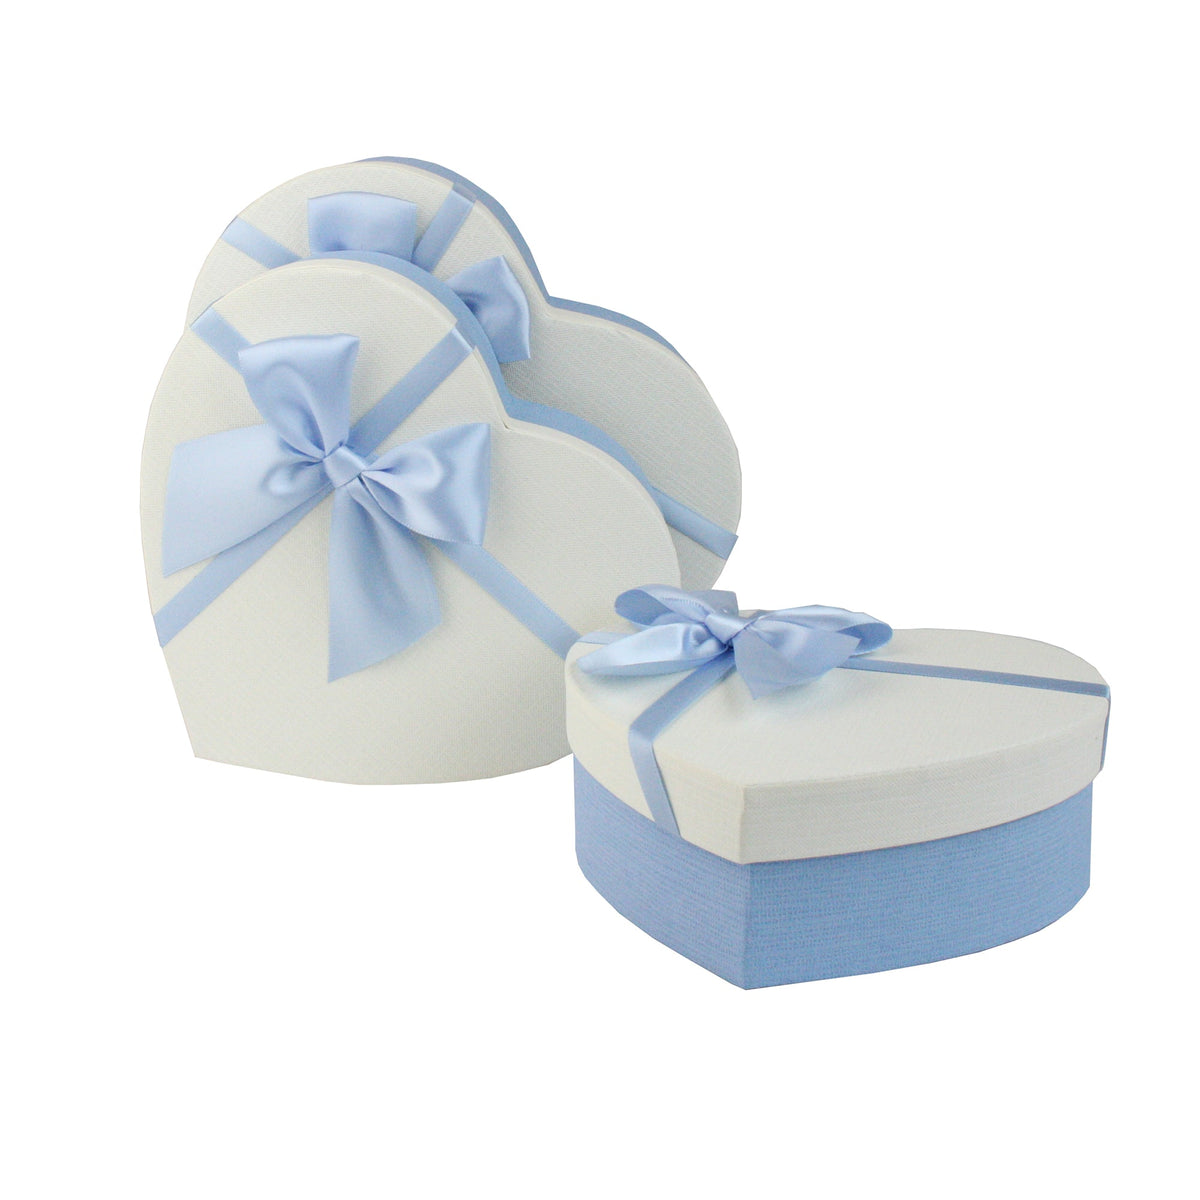 Luxury Heart Shaped Blue/White Gift Boxes - Set of 3